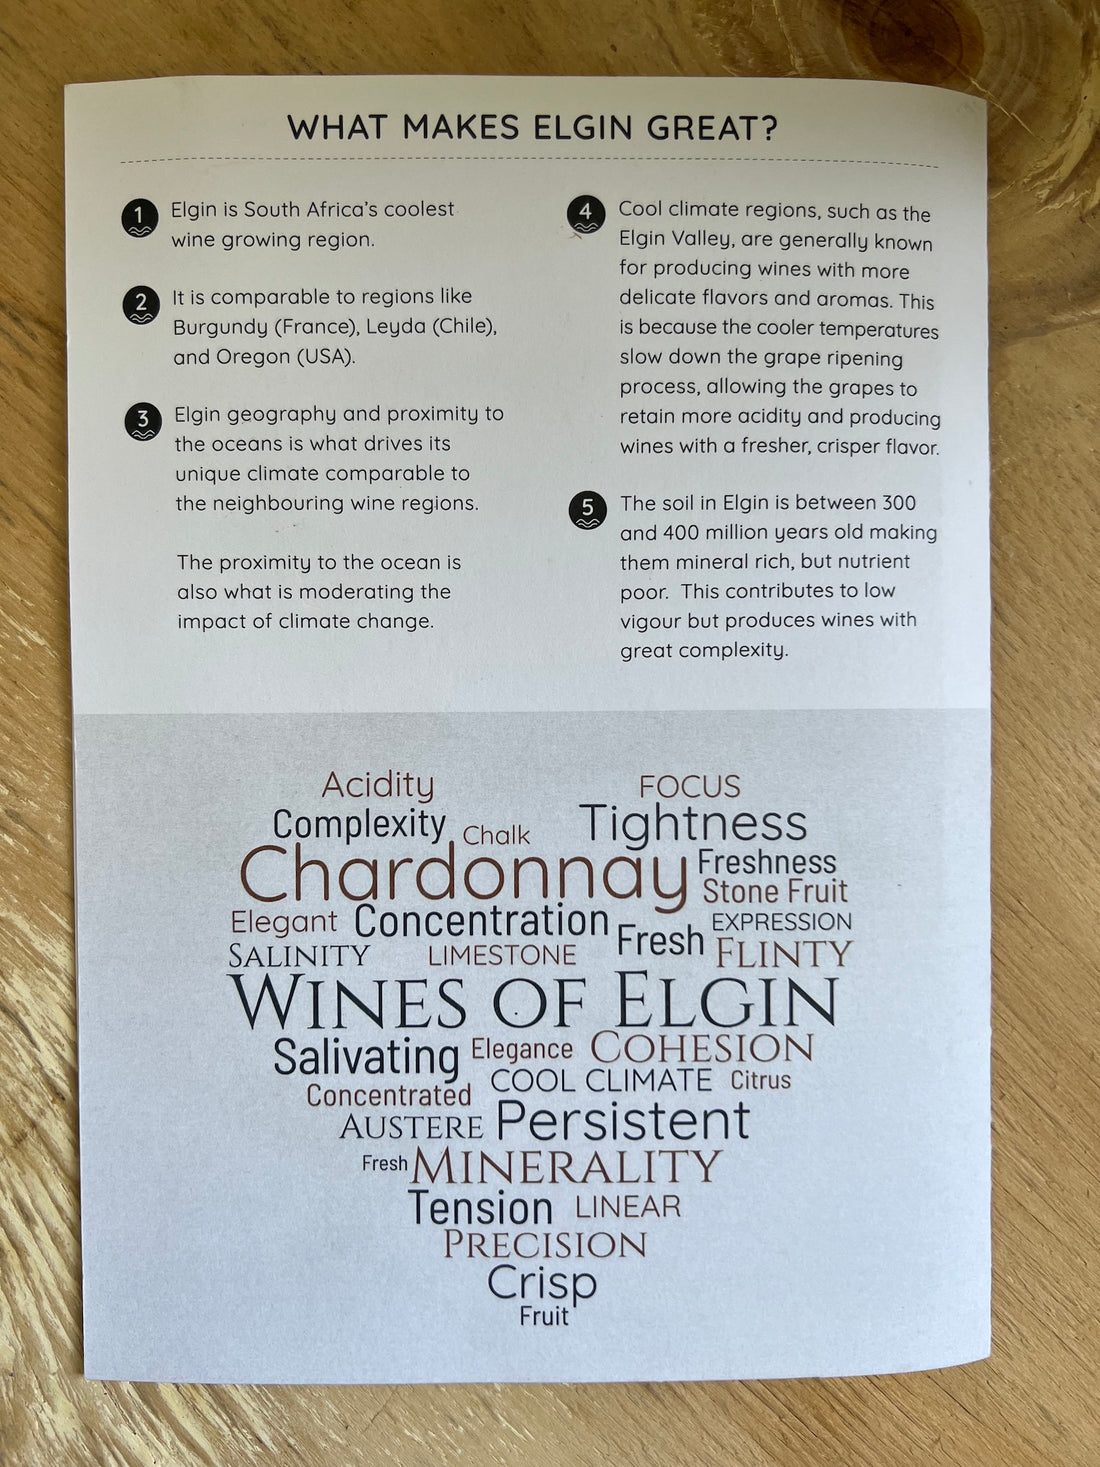 The Chardonnays of Elgin